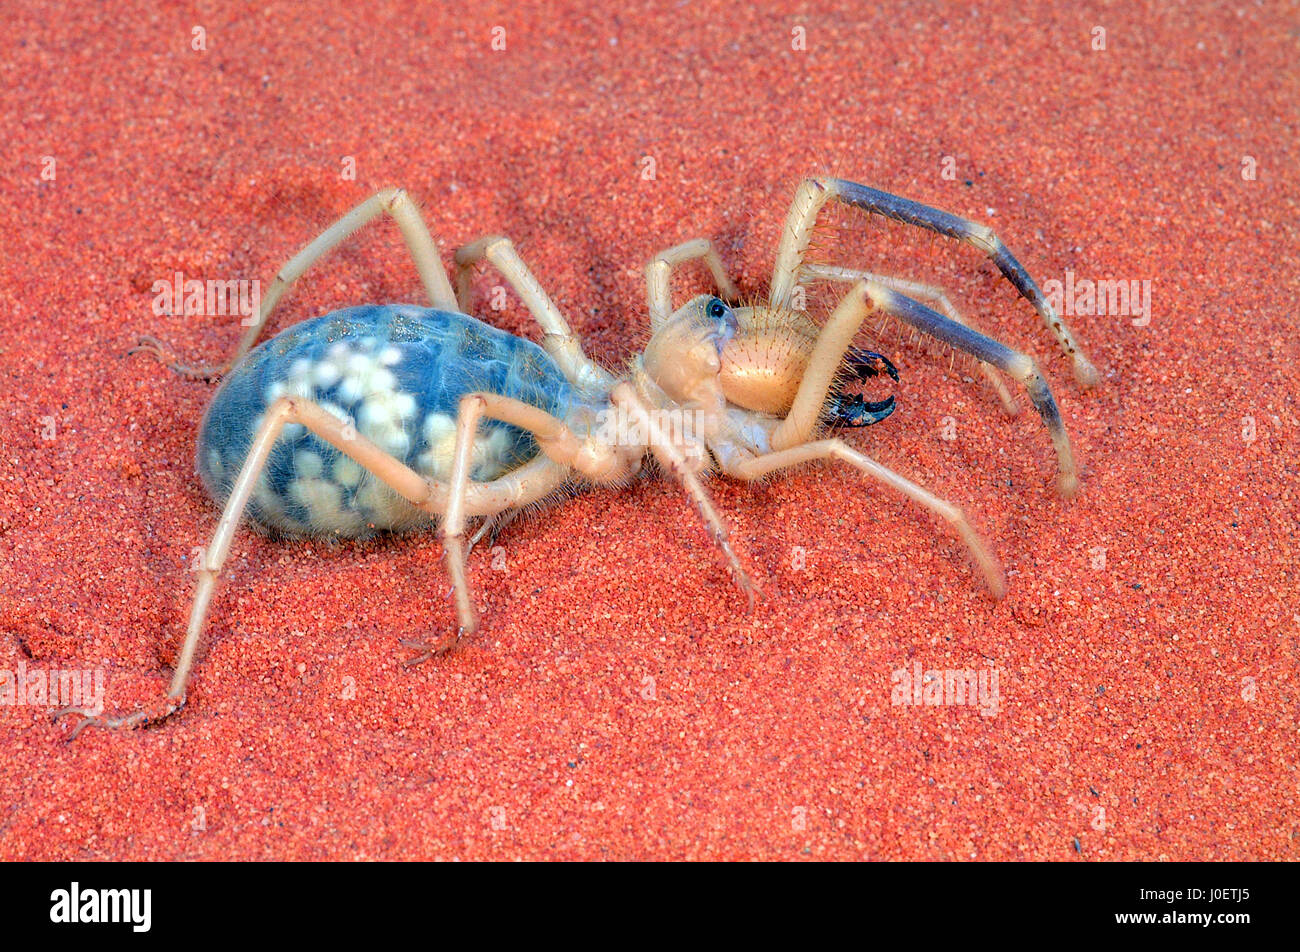 Camel spider female showing eggs in abdomen Stock Photo